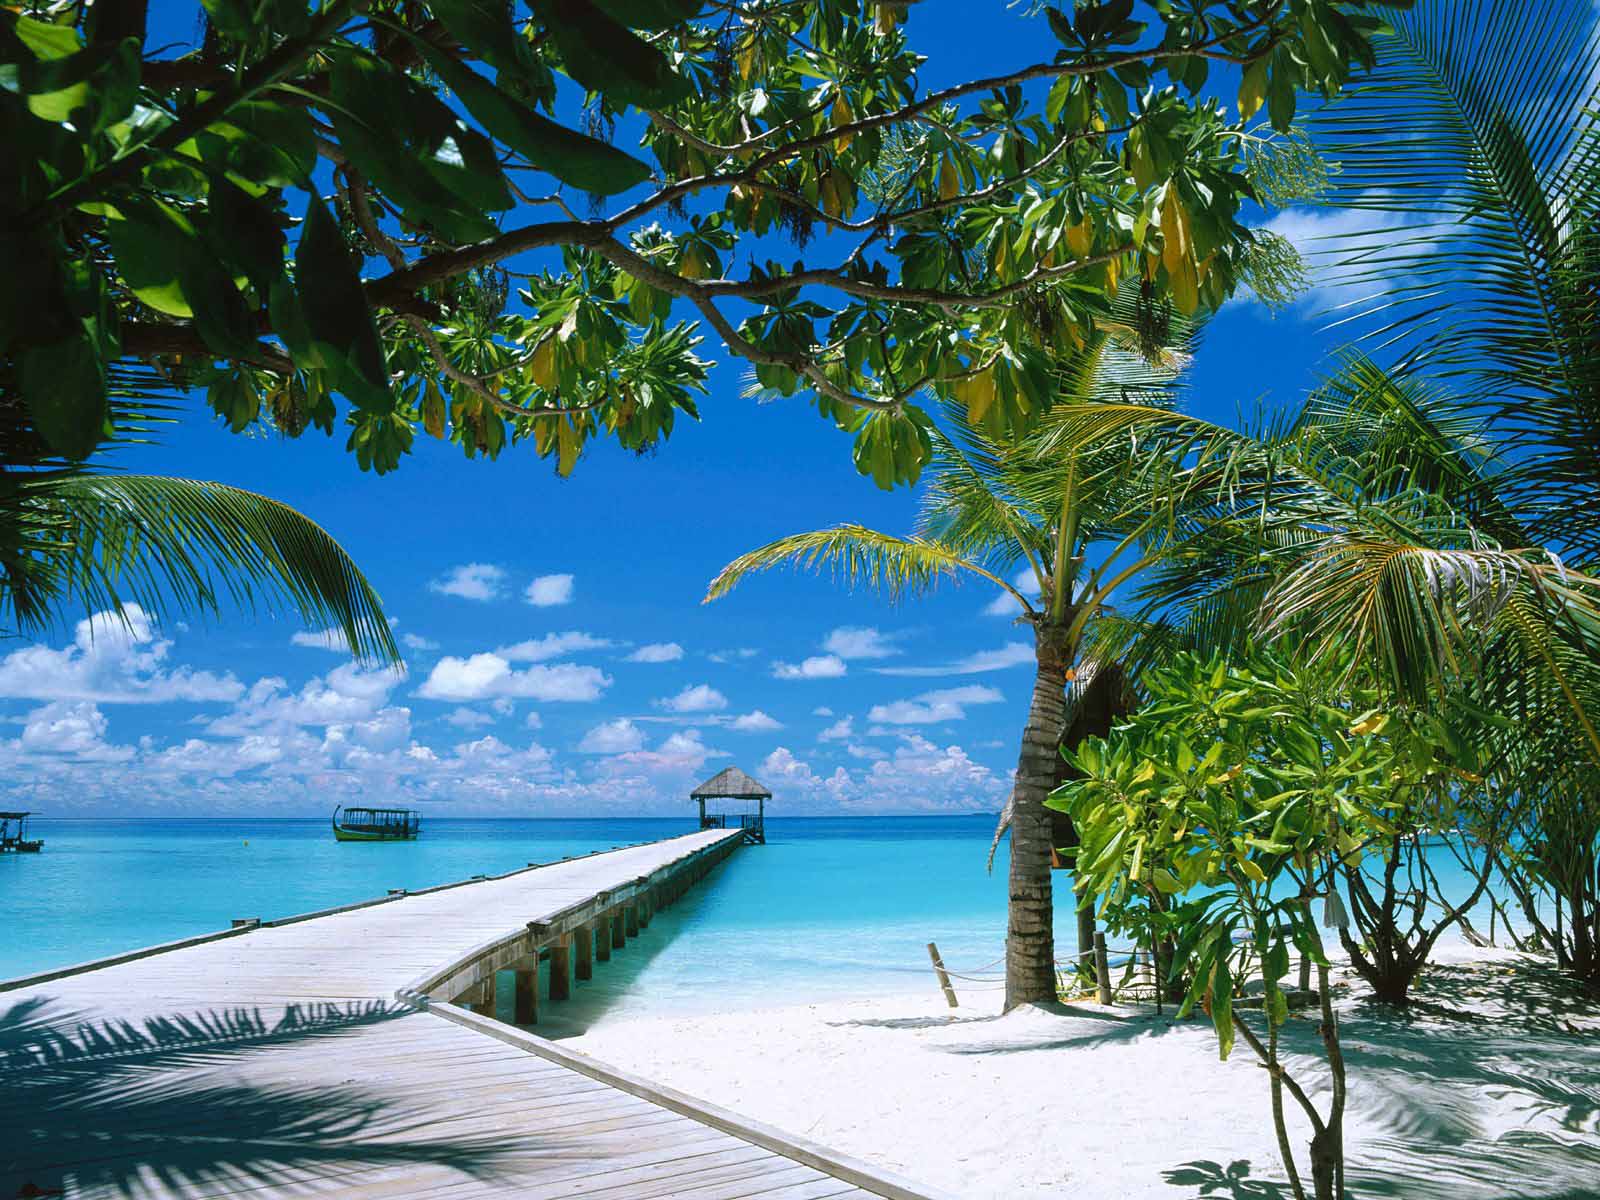 Tropical Beaches With Palm Trees Tropical Beach